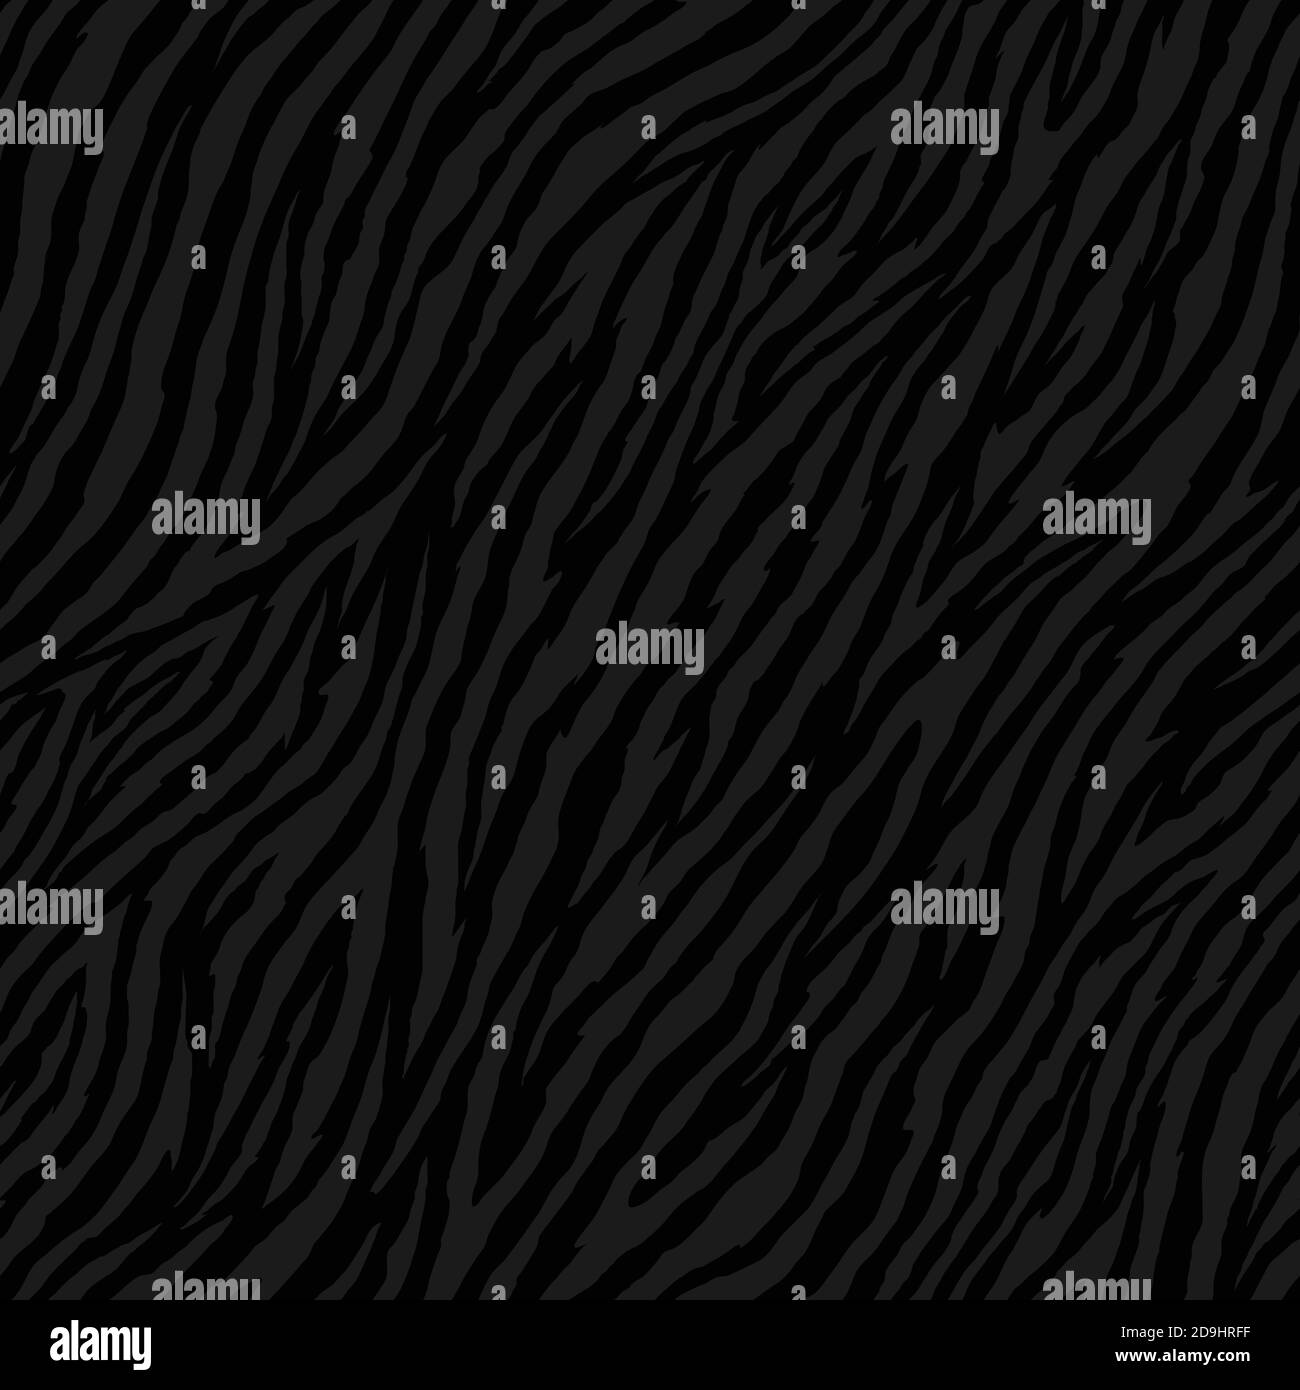 Dark zebra seamless pattern. Animal skin vector illustration pattern for surface, t shirt design, print, poster, icon, web, graphic designs. Stock Vector